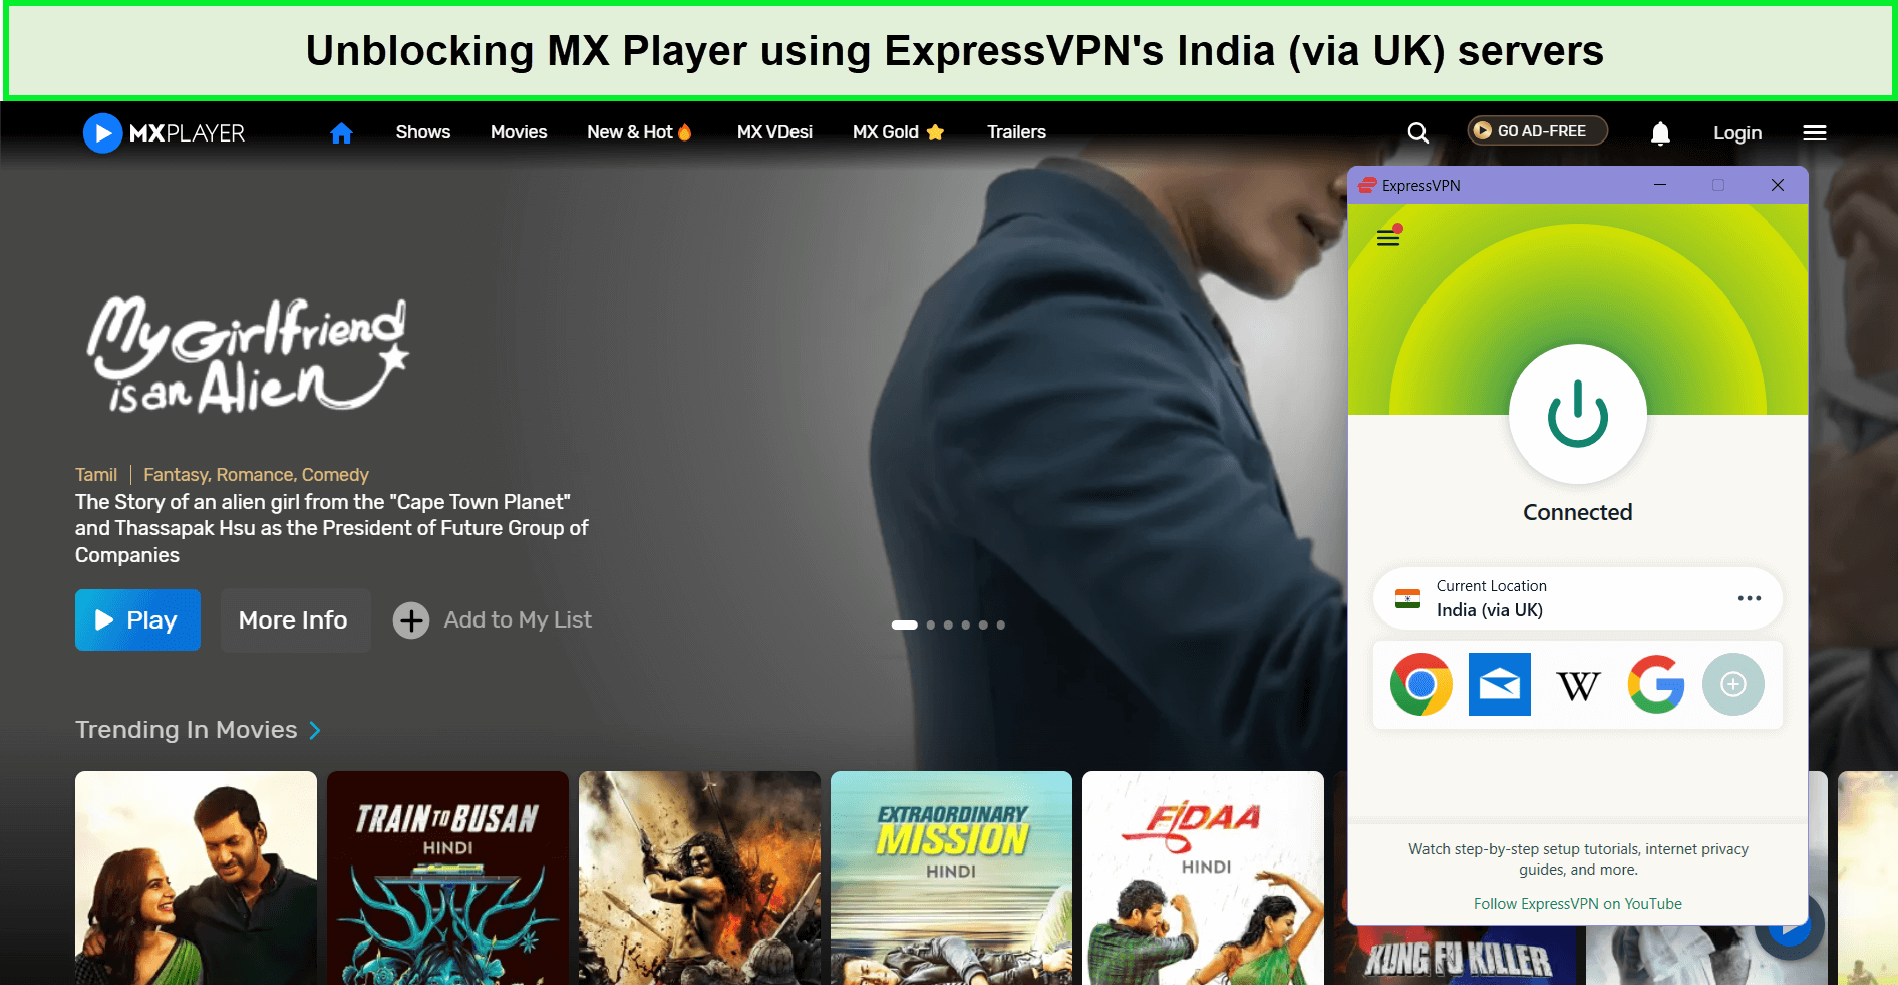 mx-player-in-Singapore-unblocked-expressvpn